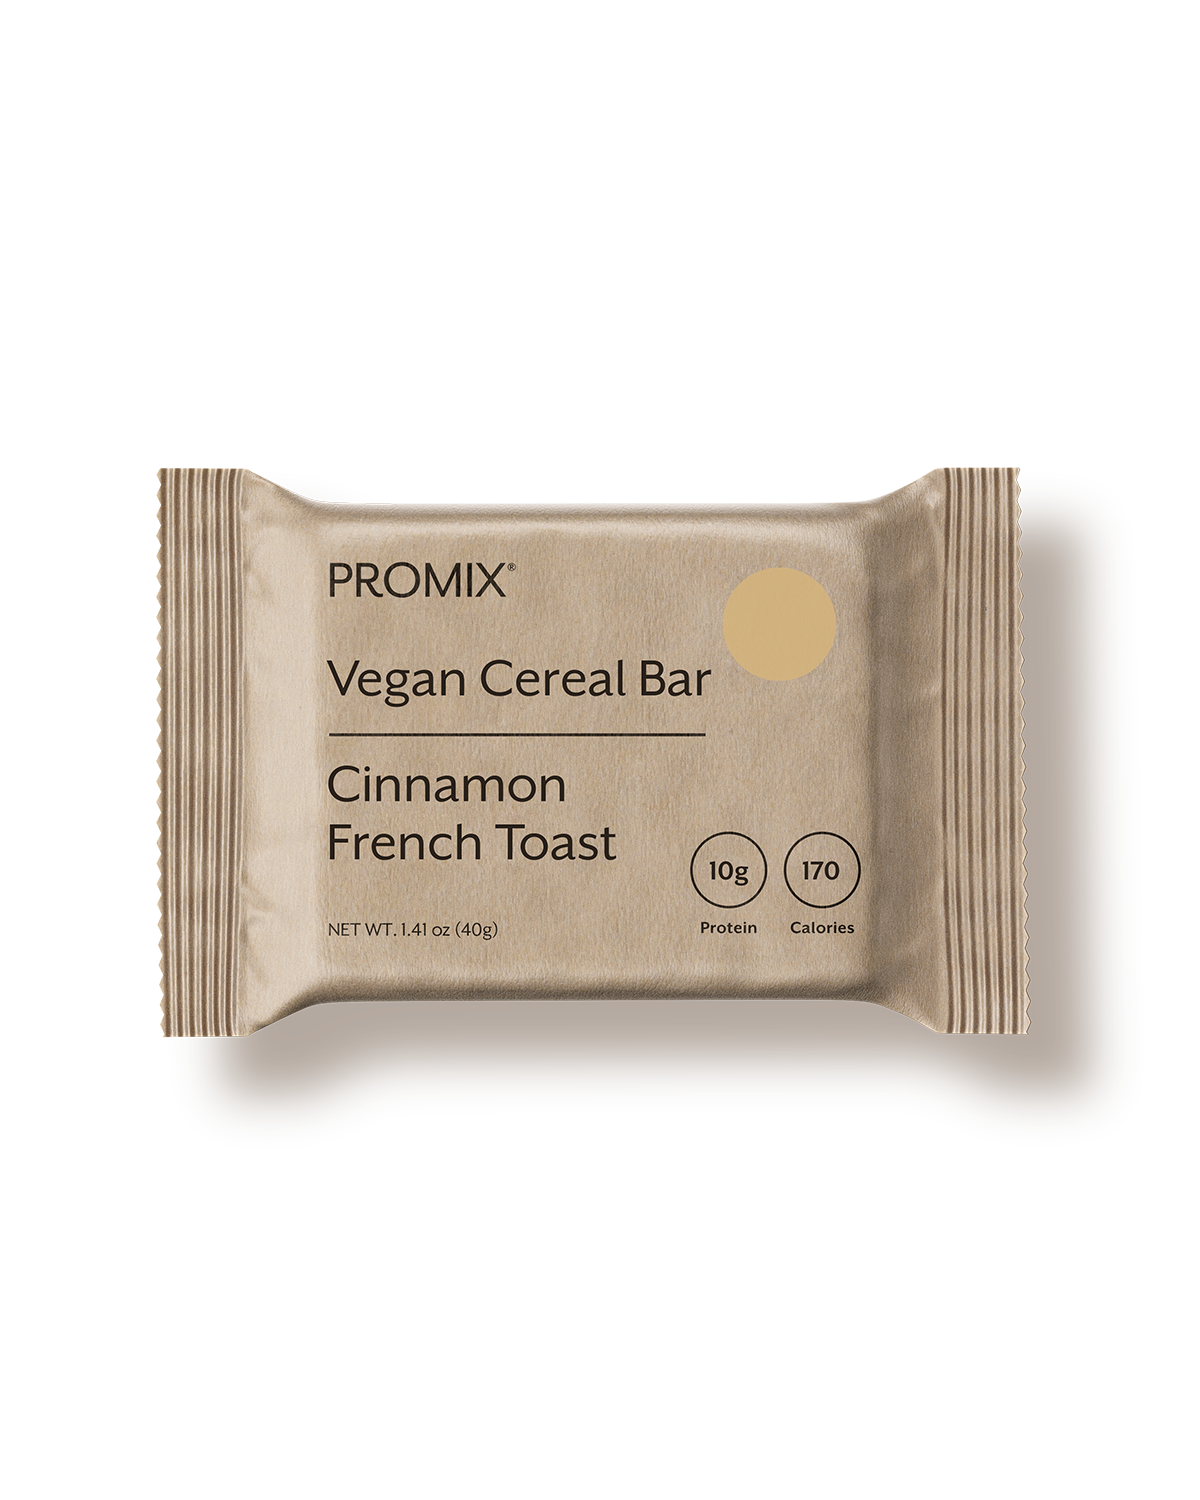 Cinnamon French Toast Vegan Cereal Bars, Size: 12 bars